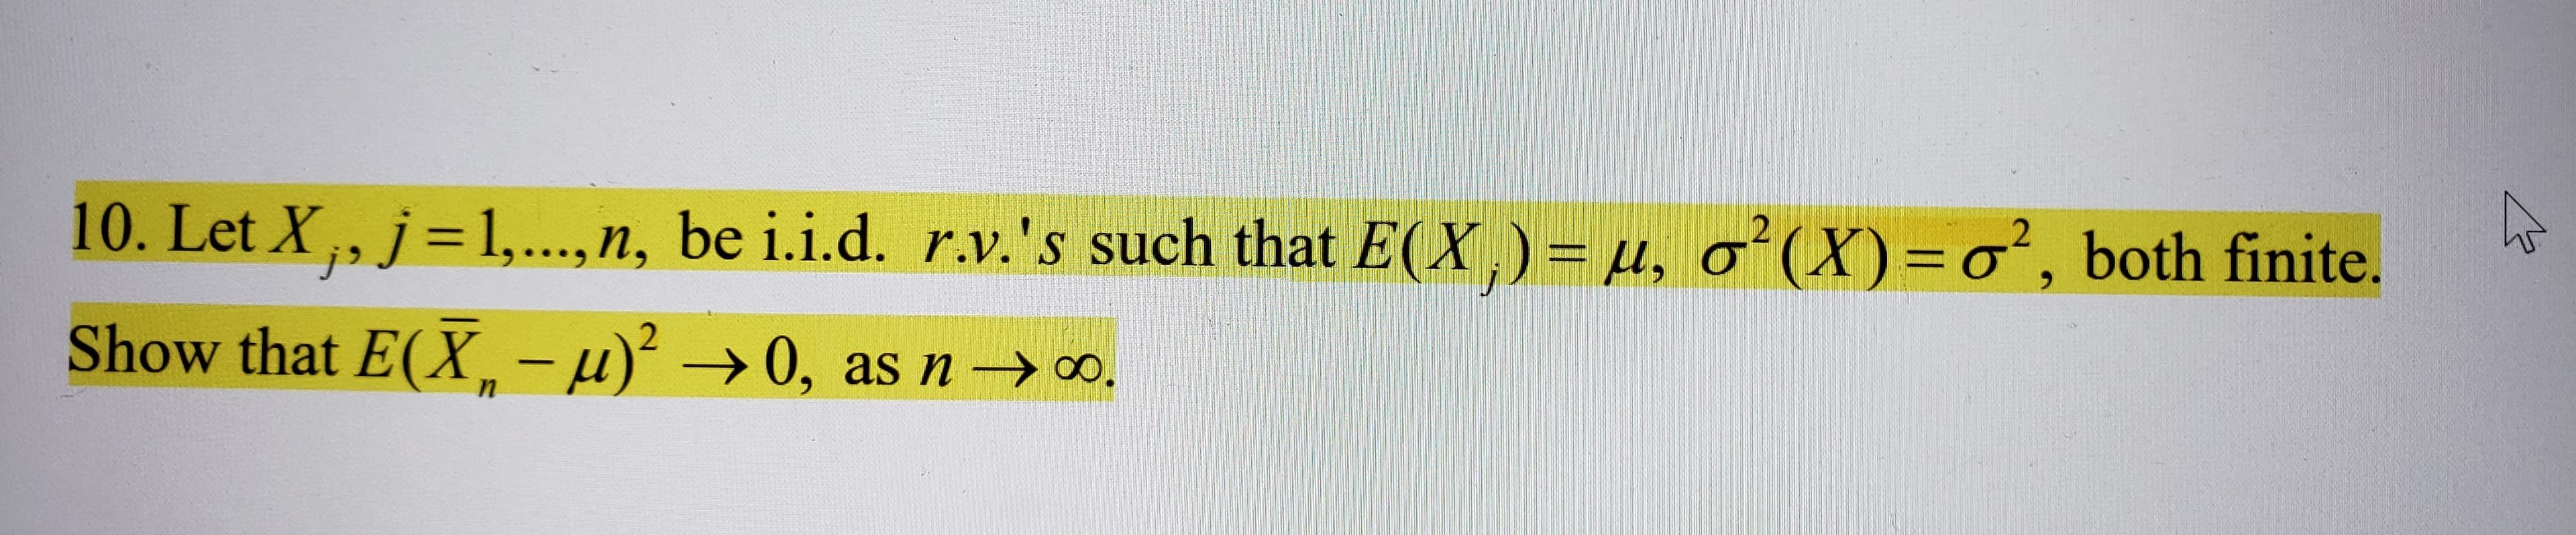 10. Let X , j= 1,.., n, be i.i.d. r.v.'s such that E(X,)= µ, o'(X)=o', both finite.
j'
Show that E(X - µ) →0, as n→0.
